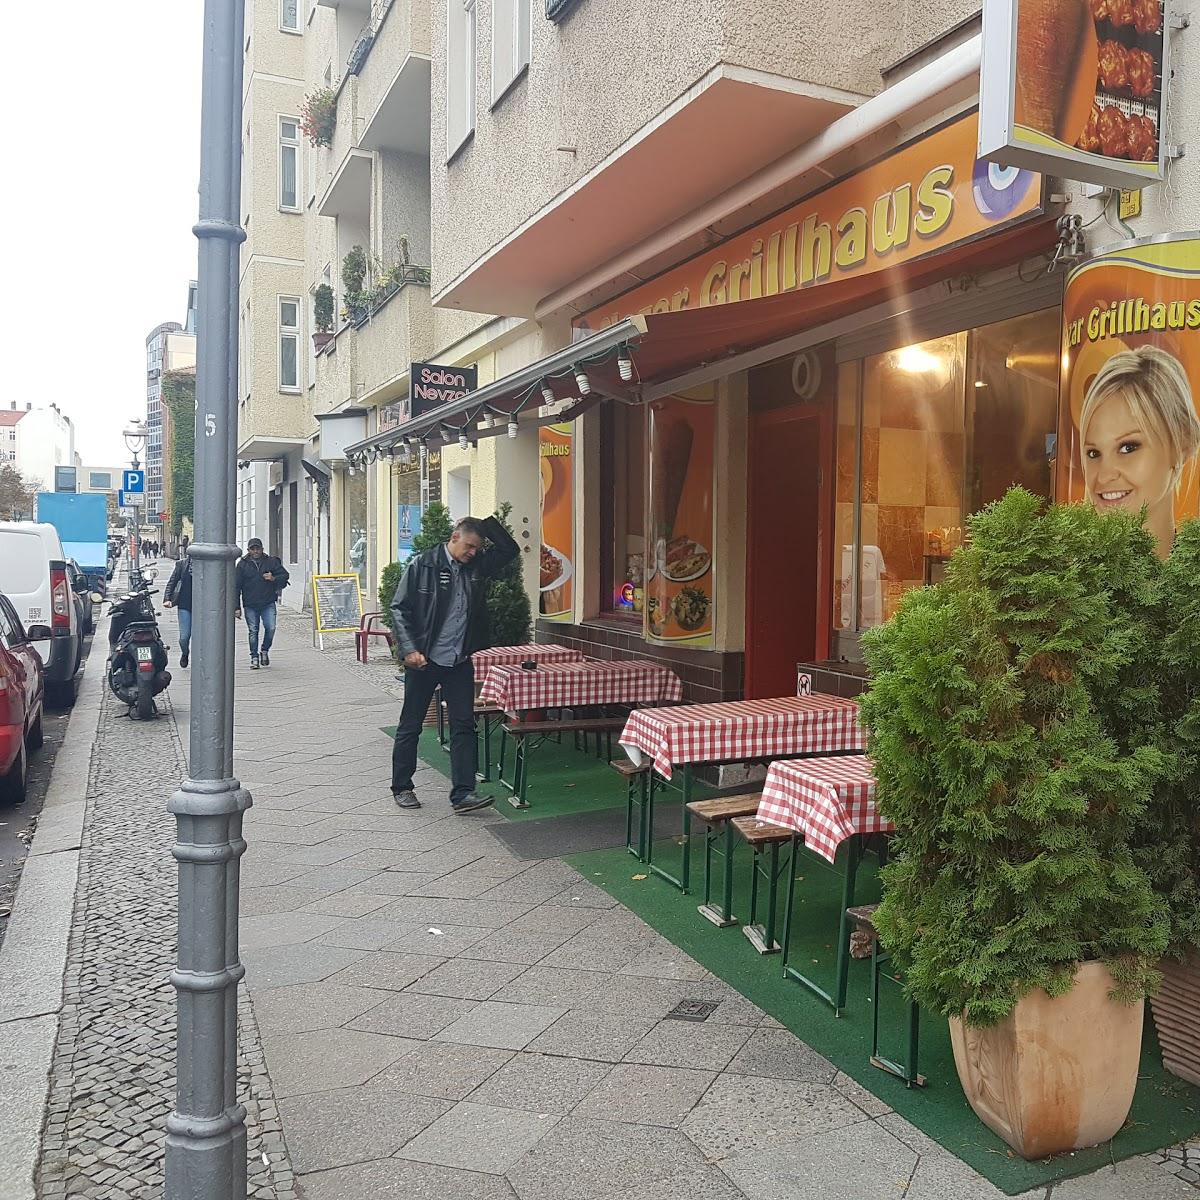 Restaurant "Nazar Grill" in Berlin